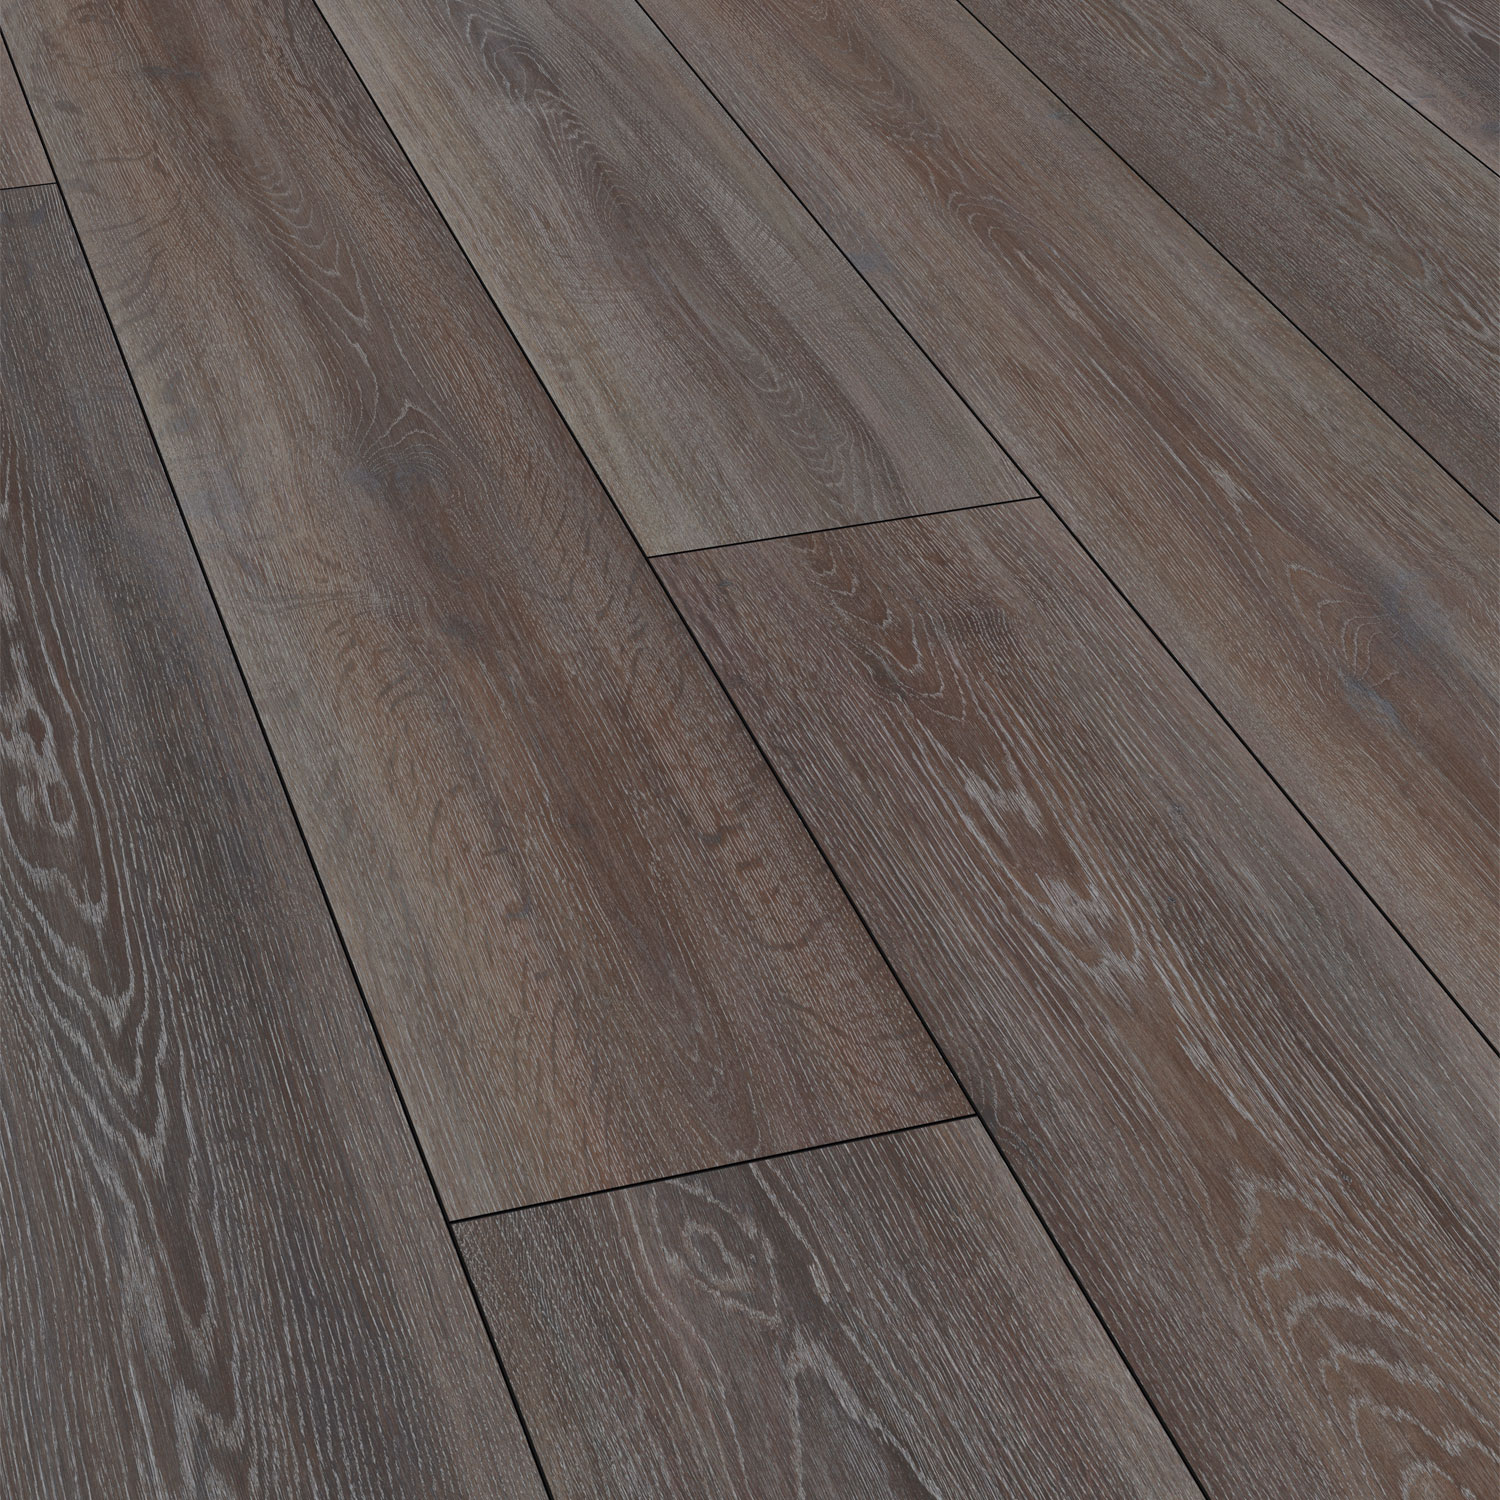 Tegola Exquisit Stirling Oak Laminate, Carpetright Laminate Flooring